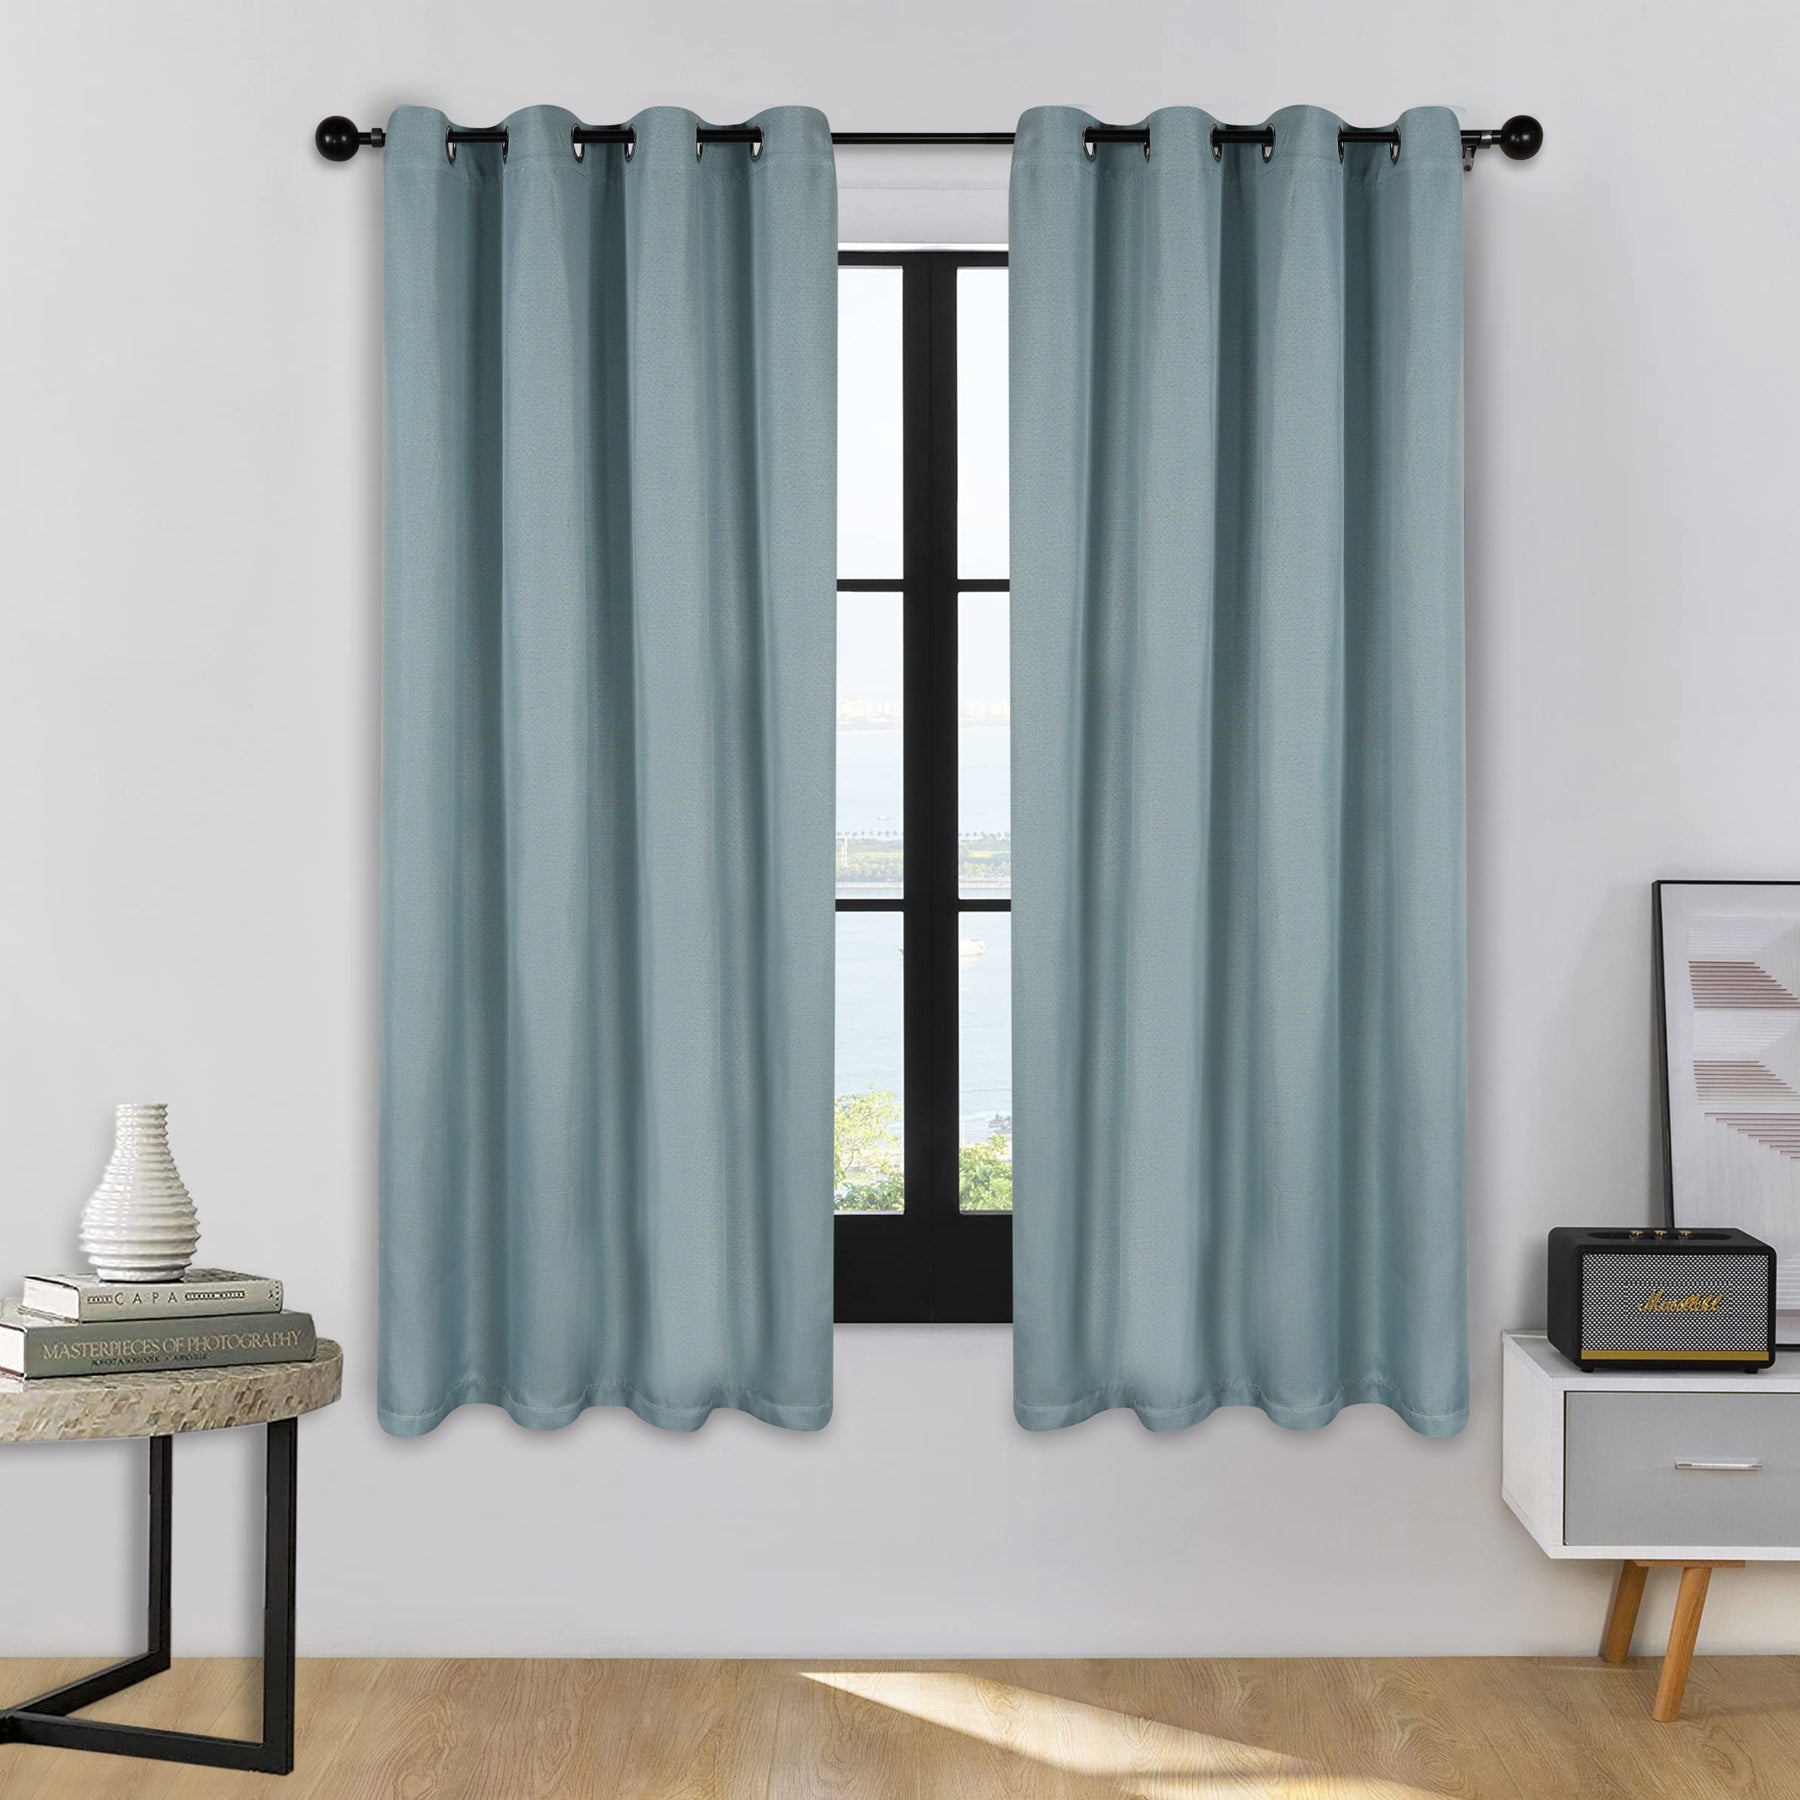 Linen Pattern Washable Room Darkening Blackout Curtains, Set of 2 - Teal